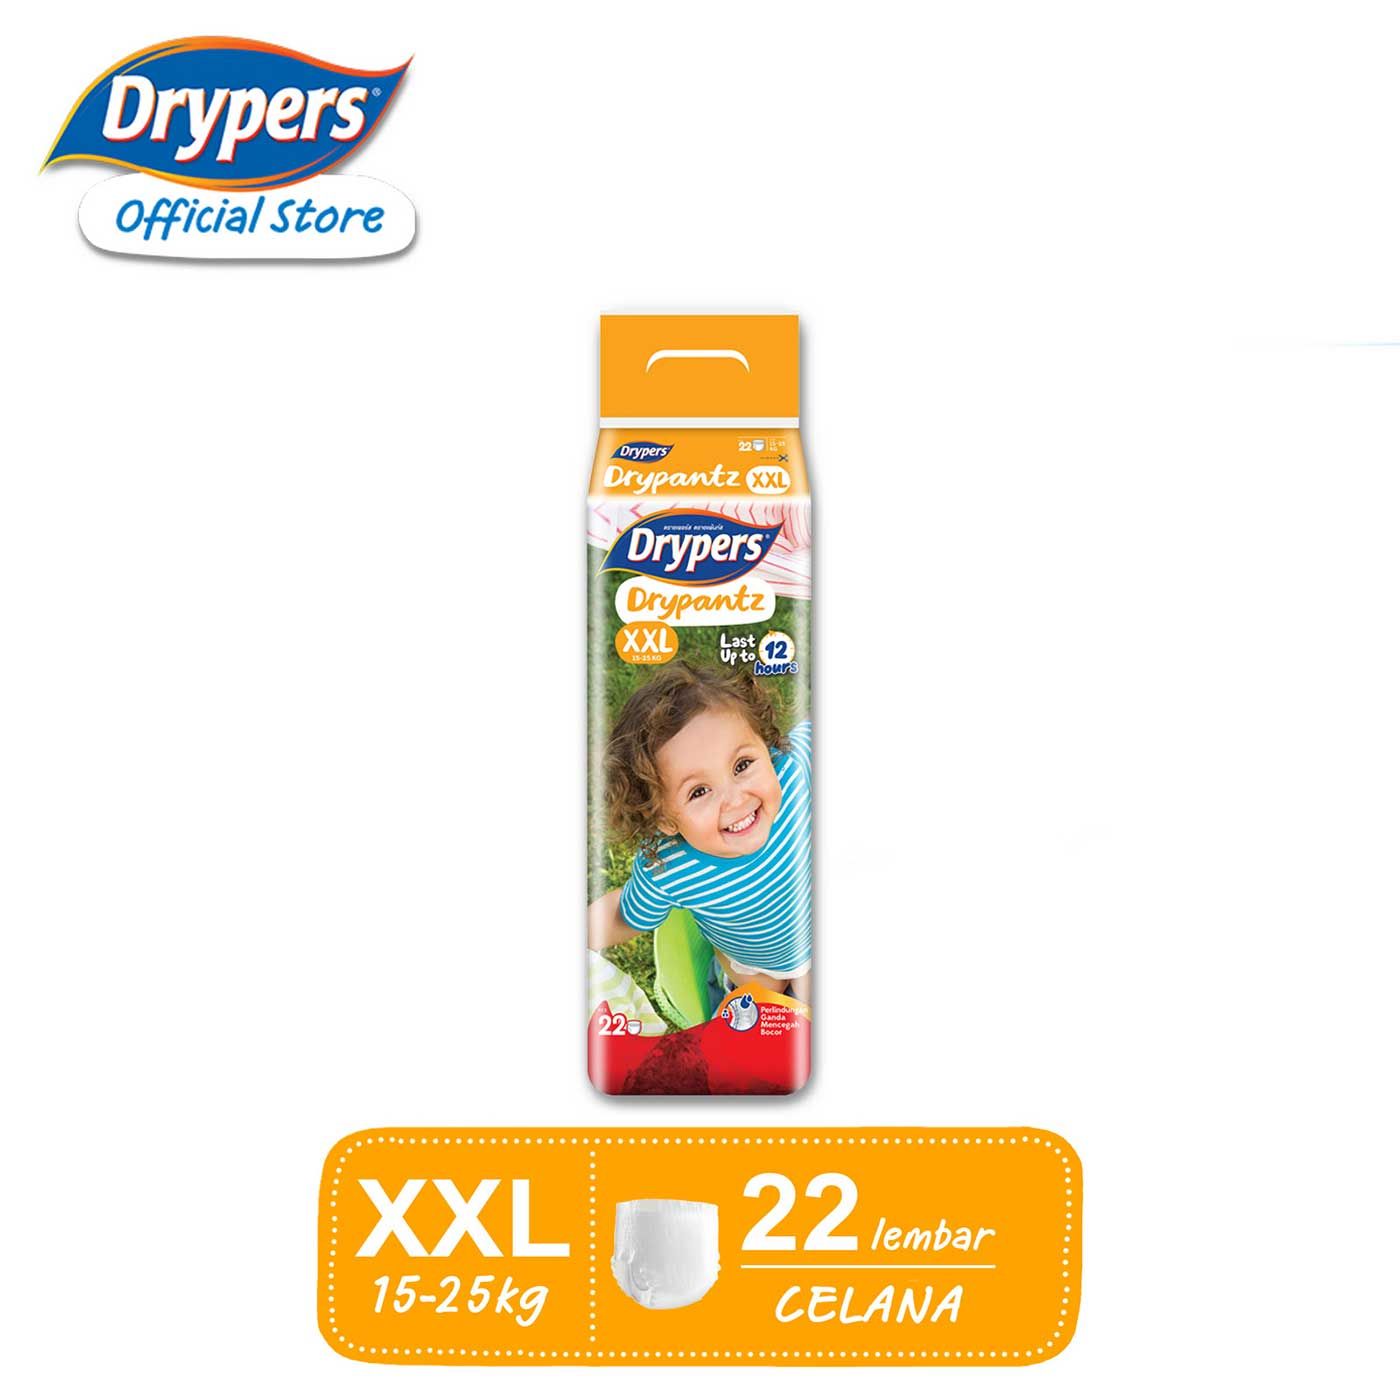 Drypers Drypantz Celana Popok - XXL 22 - 1